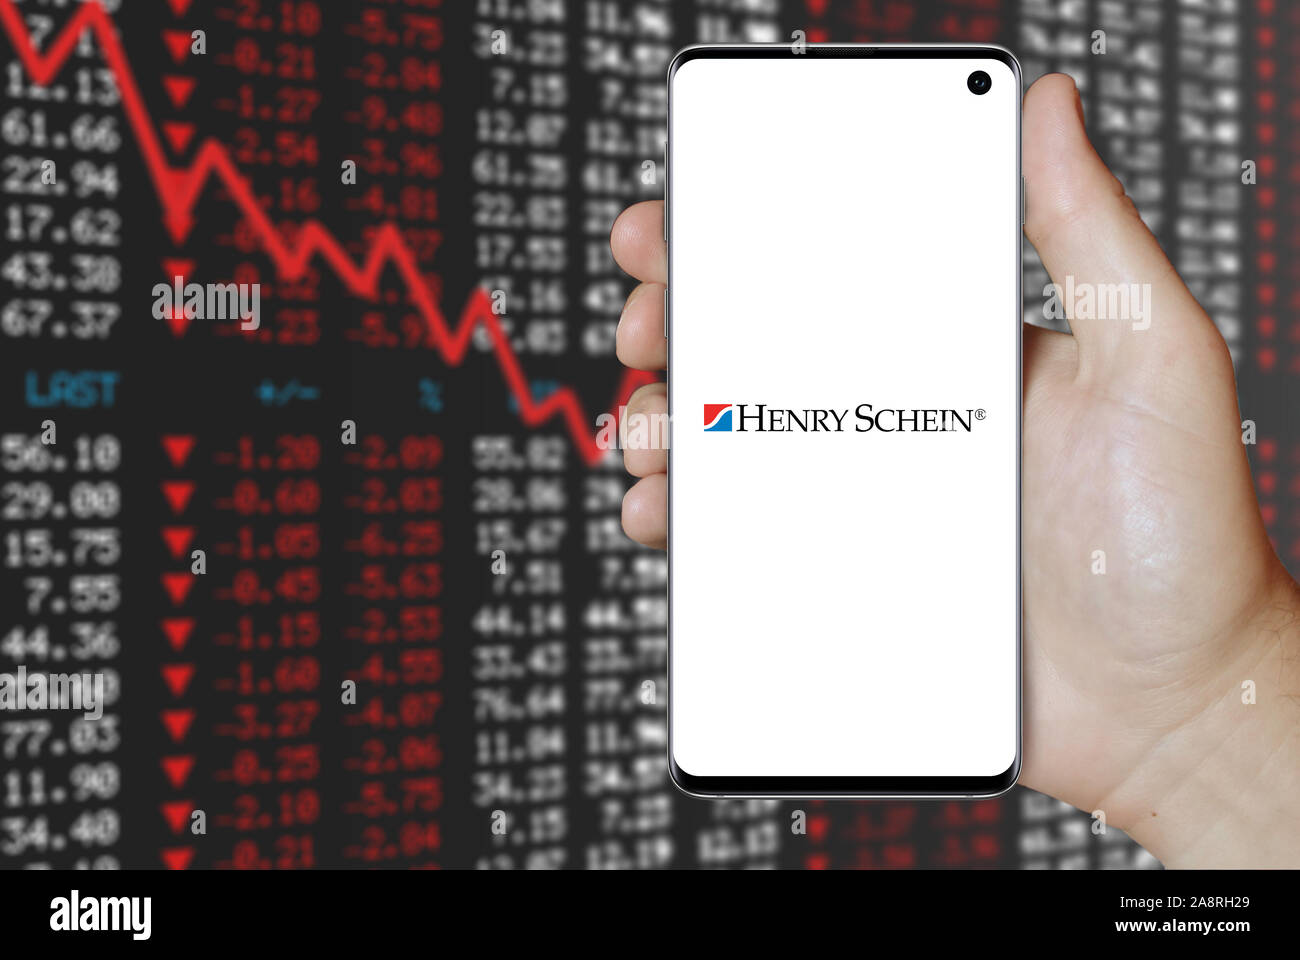 Logo of public company Henry Schein displayed on a smartphone. Negative stock market background. Credit: PIXDUCE Stock Photo